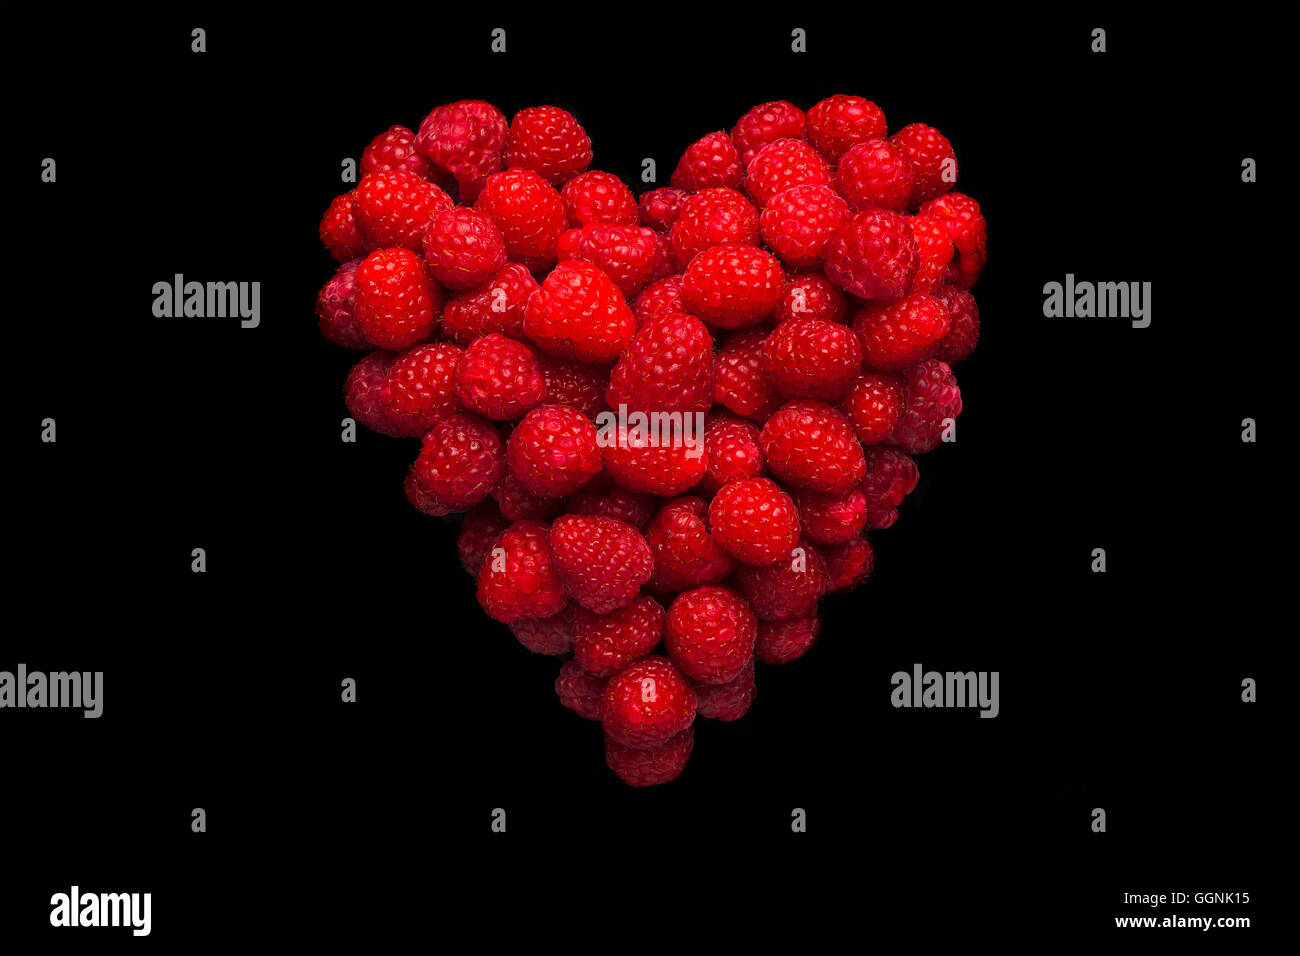 Raspberries in shape of heart on black background Stock Photo